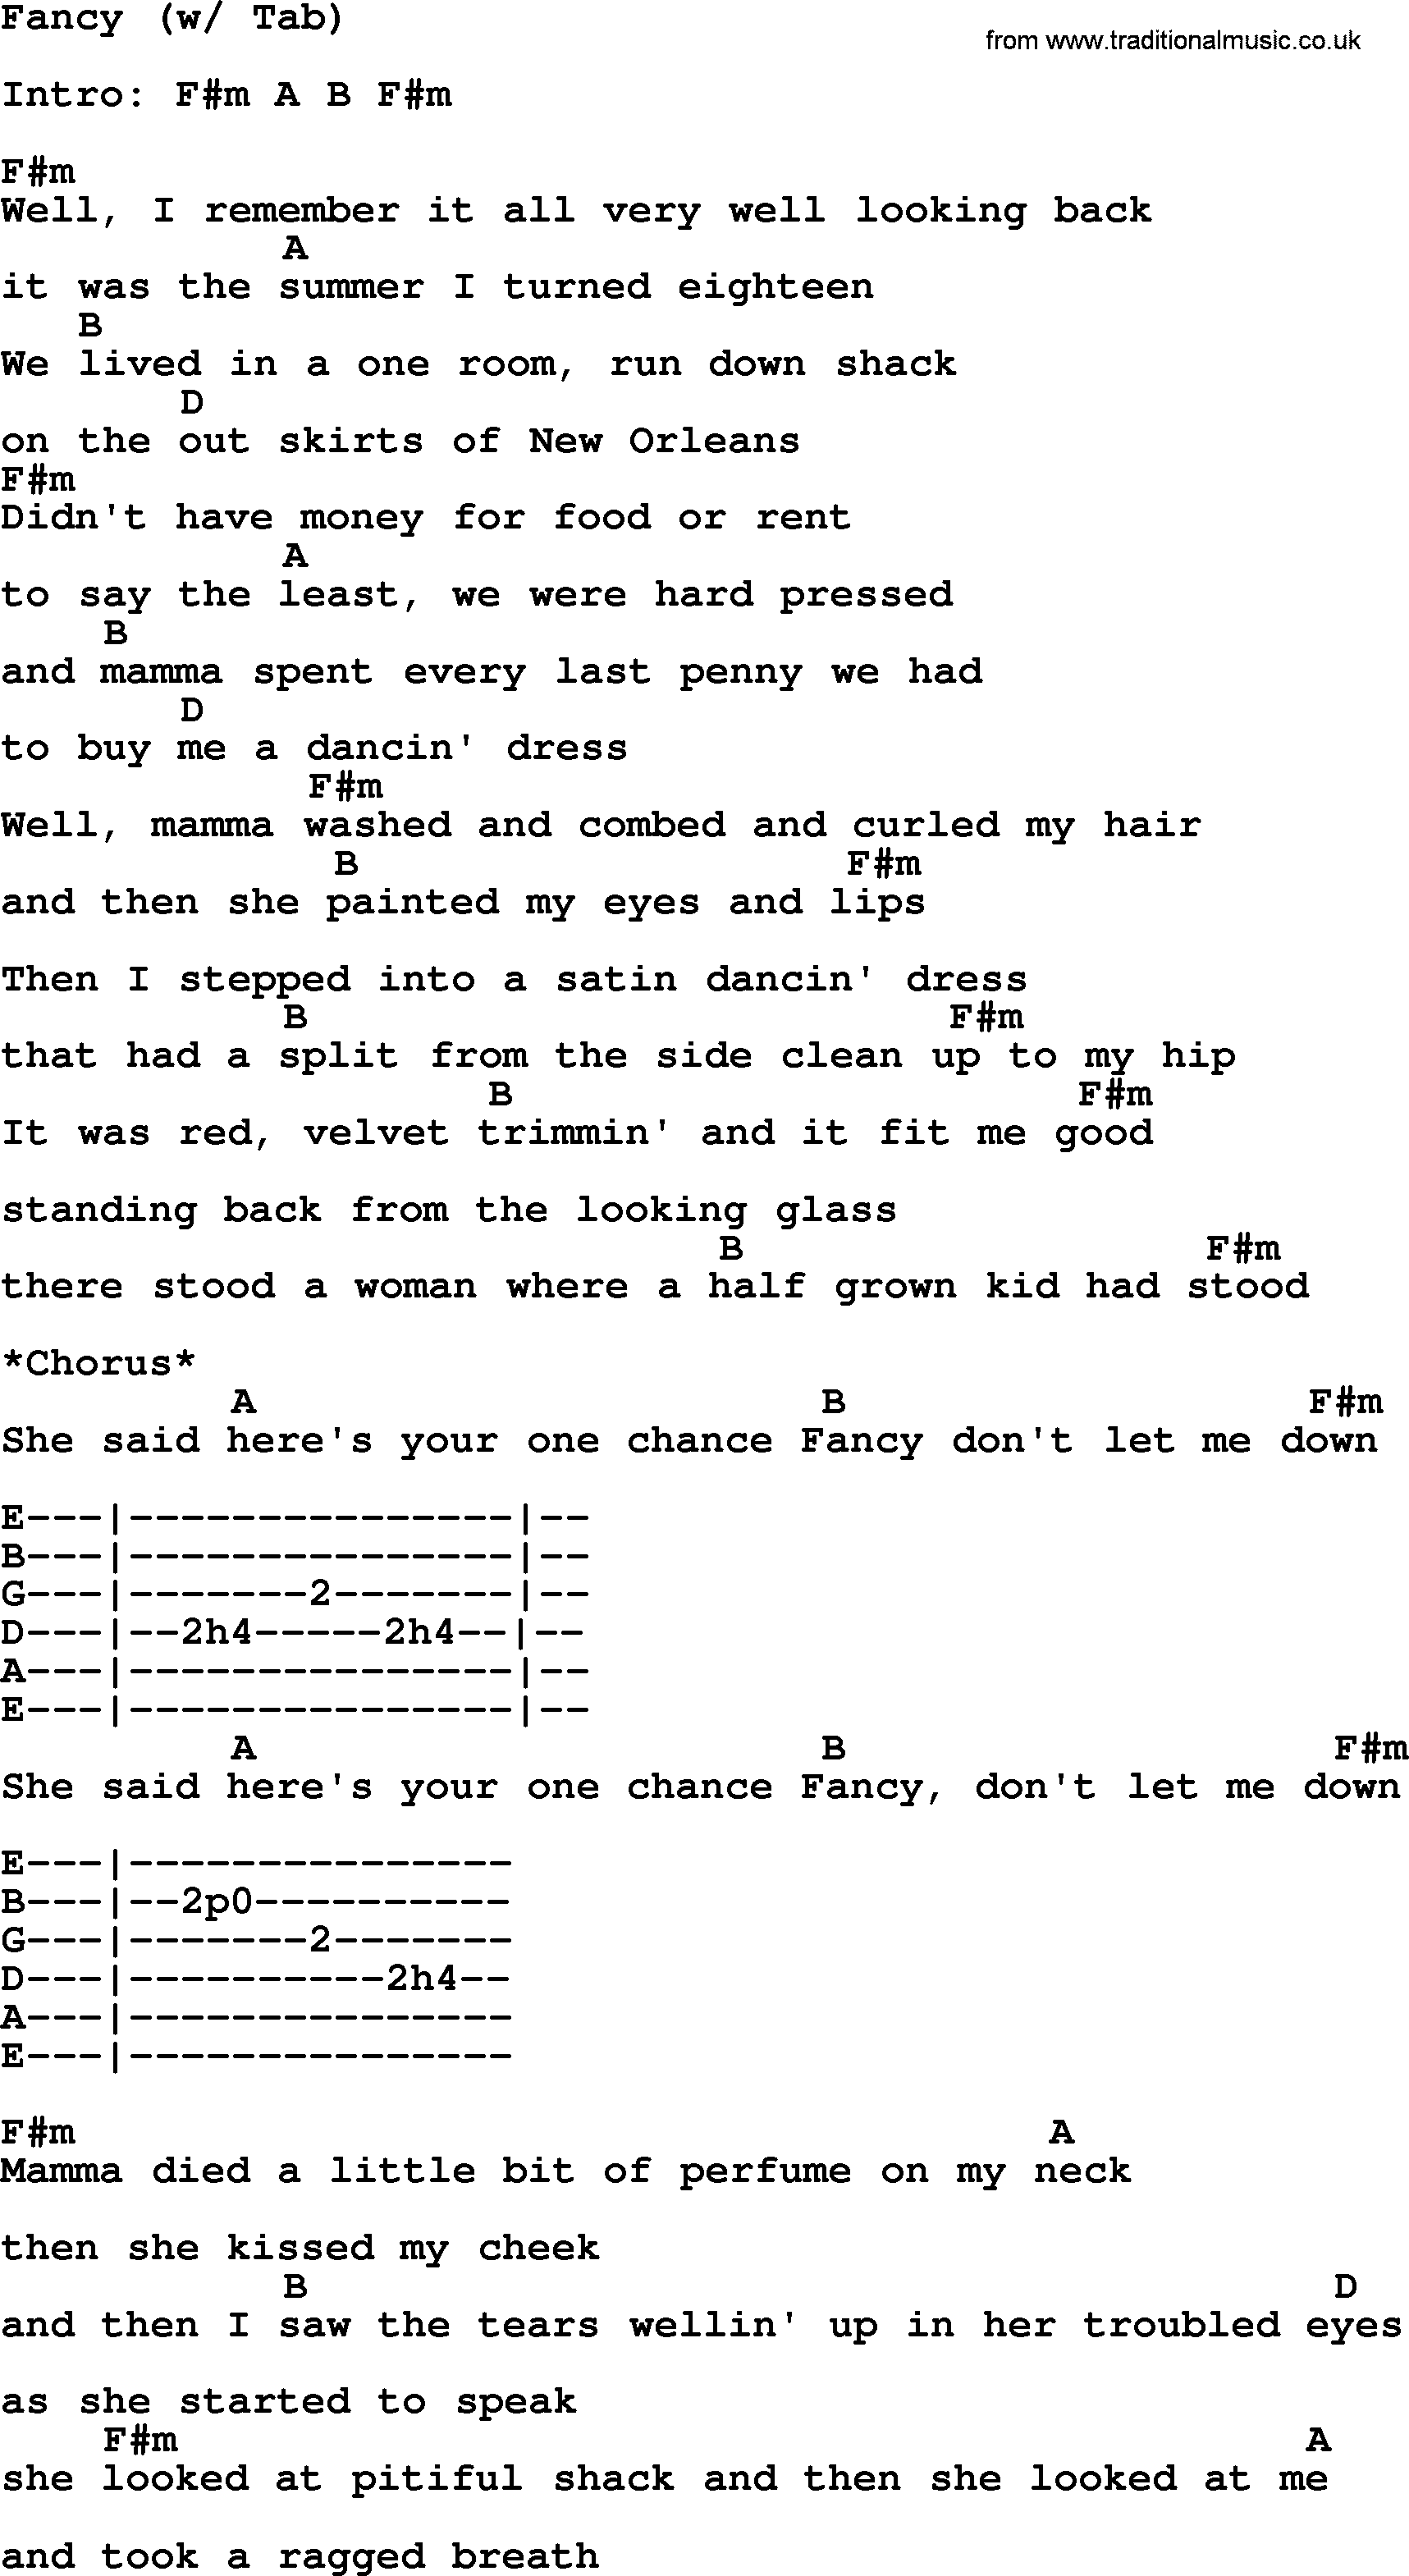 Reba McEntire song: Fancy (Tab), lyrics and chords